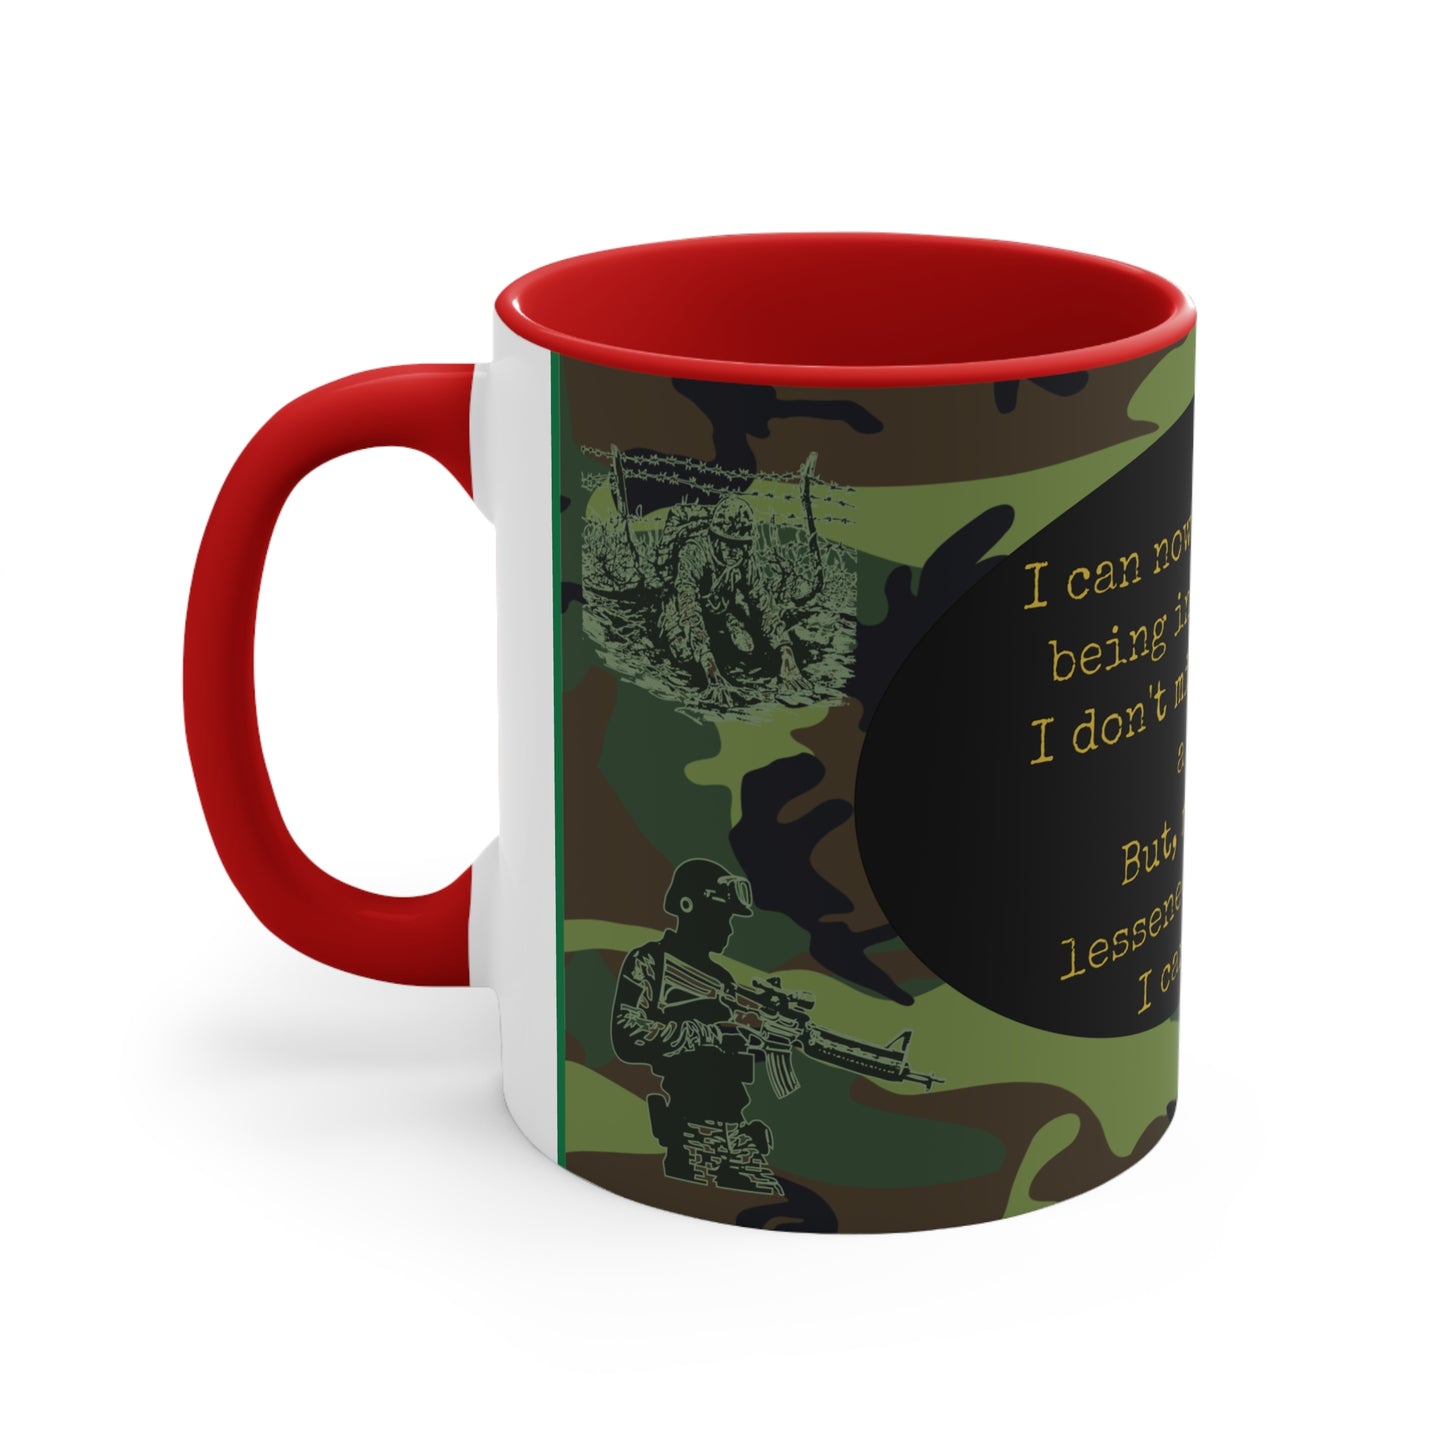 I Miss the Military, Accent Coffee Mug